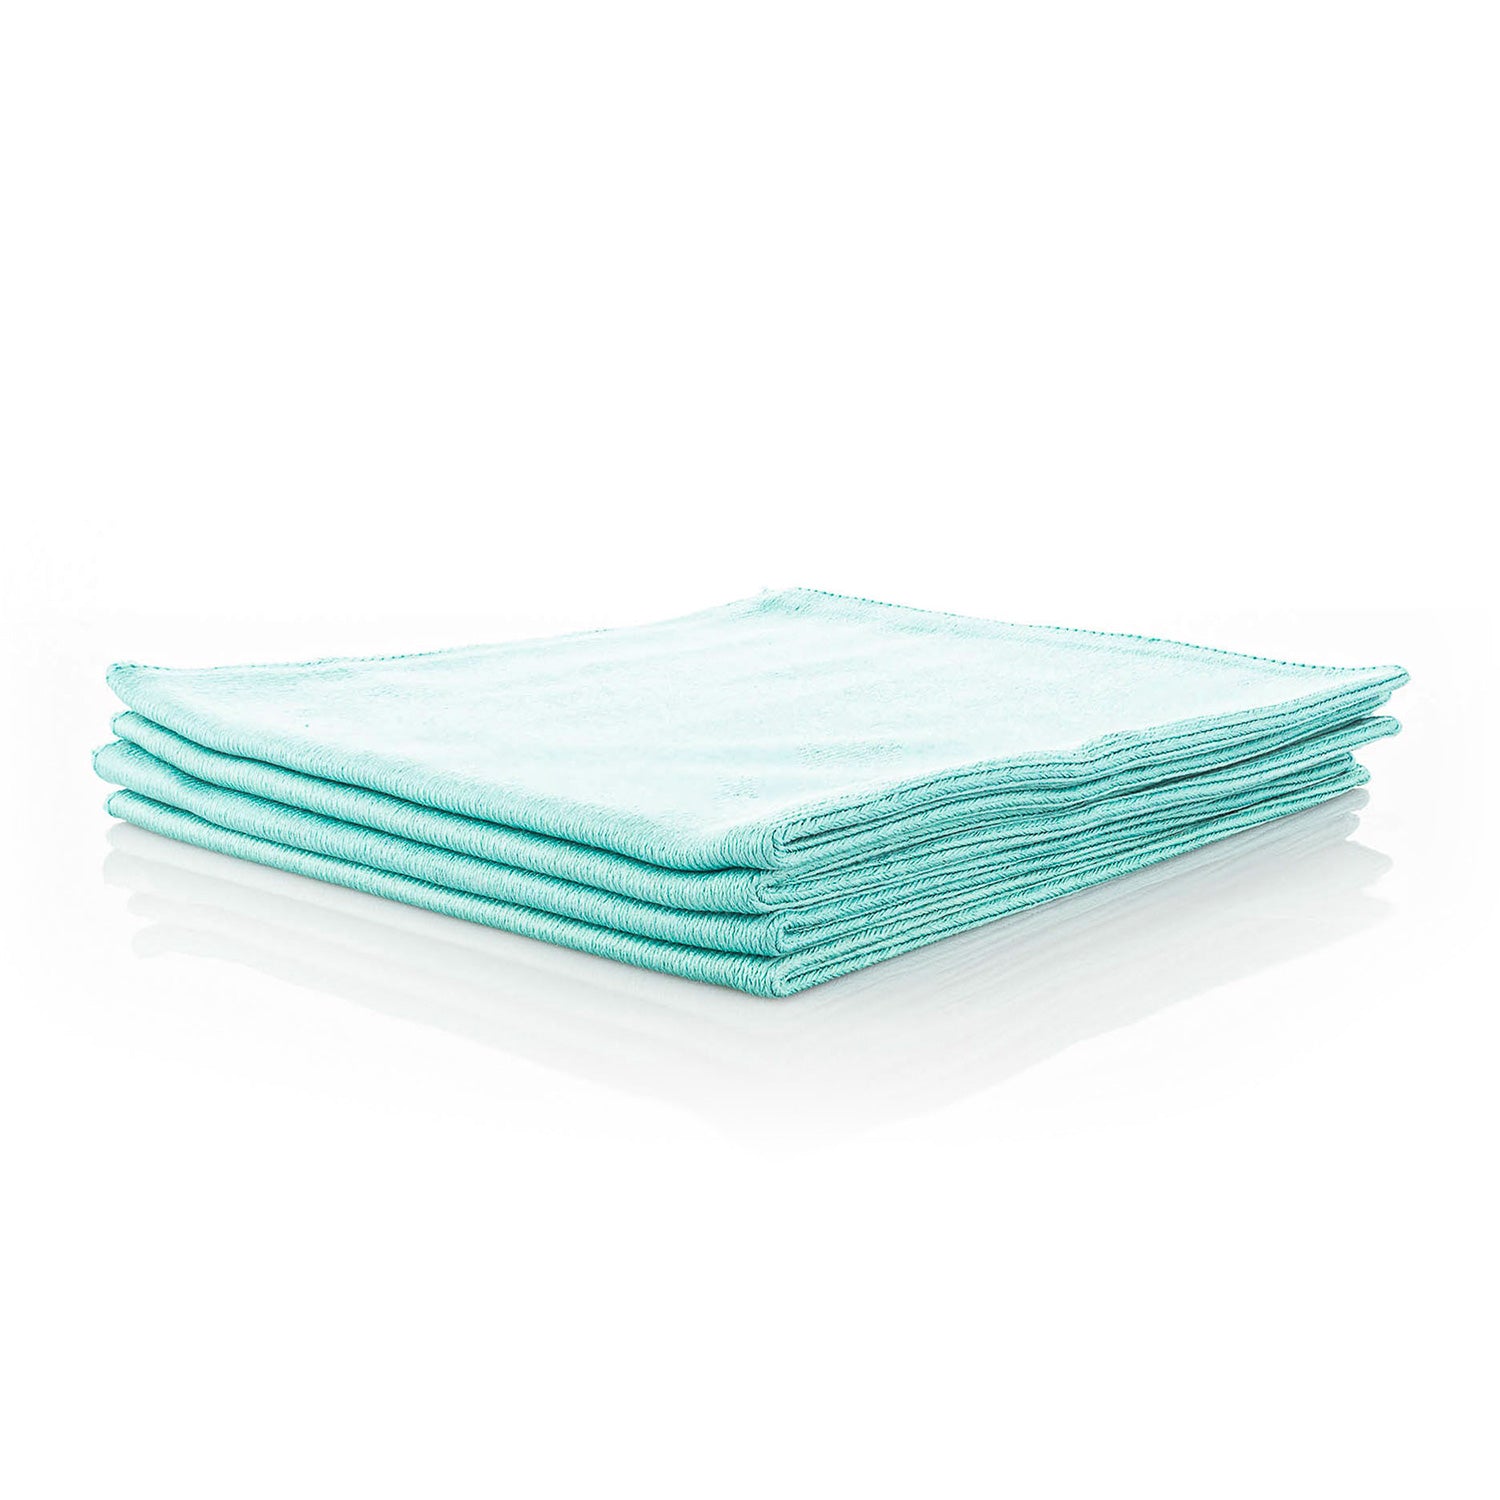 mf2g-dark-green-glass-cleaning-microfiber-towel-4-pack